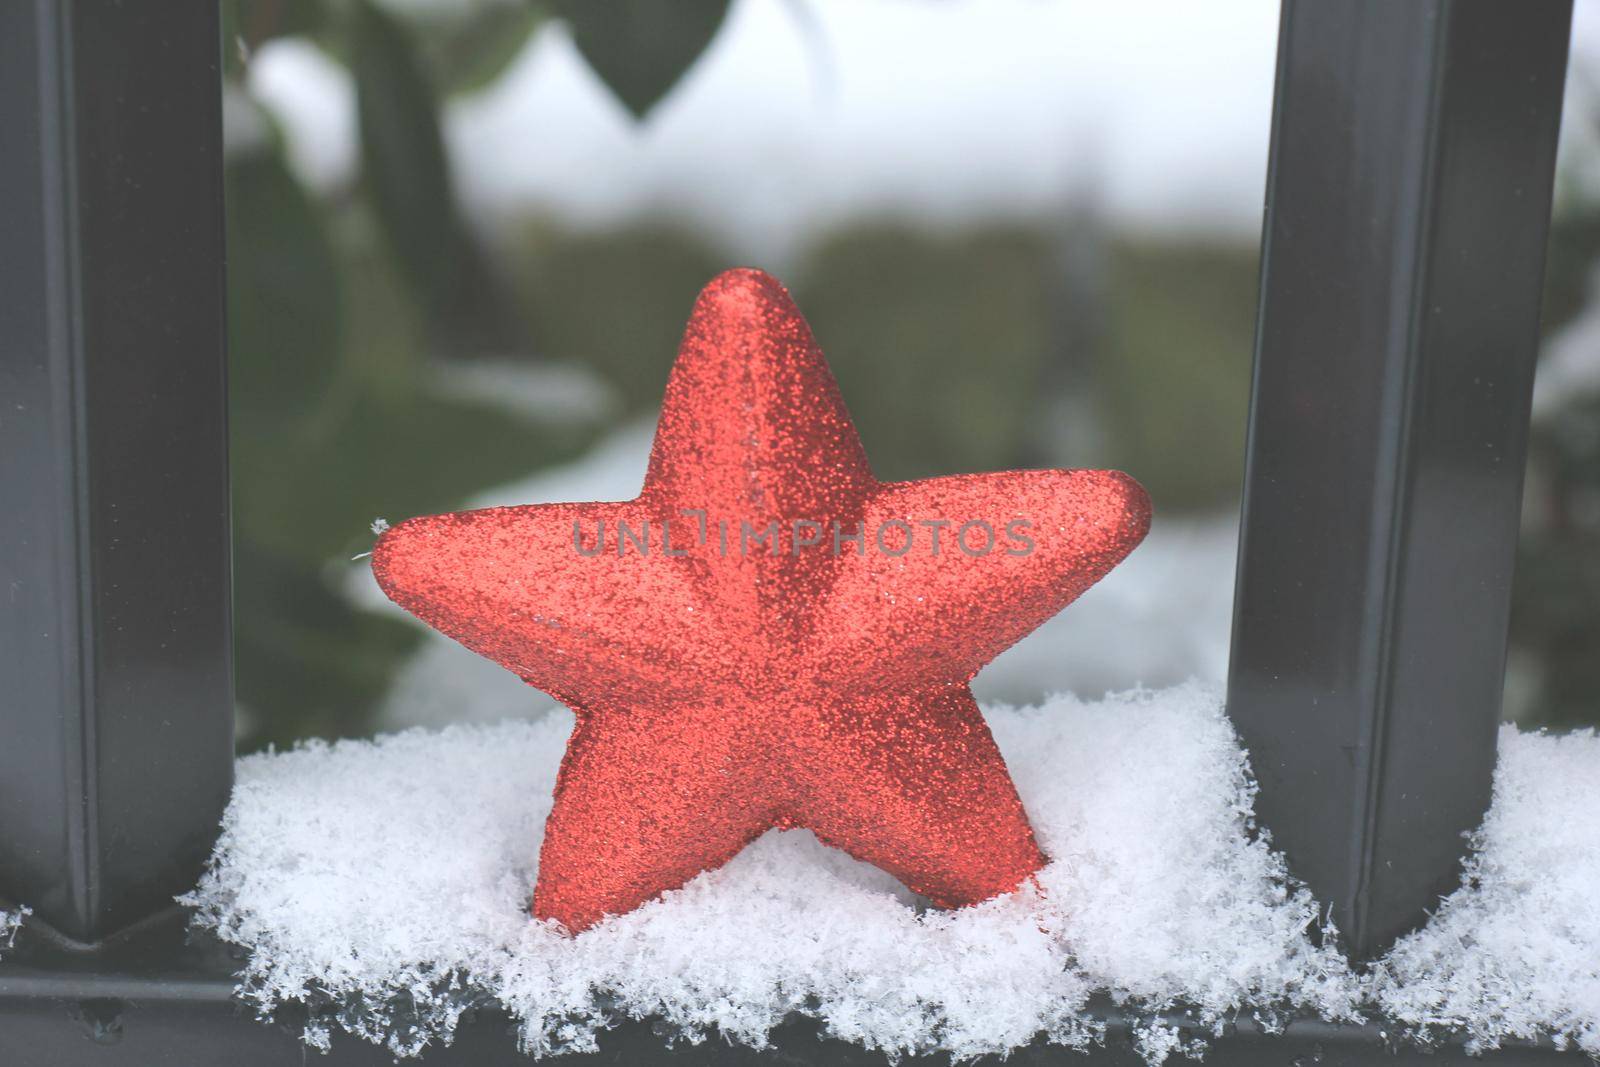 Red star ornament in fresh fallen snow by studioportosabbia